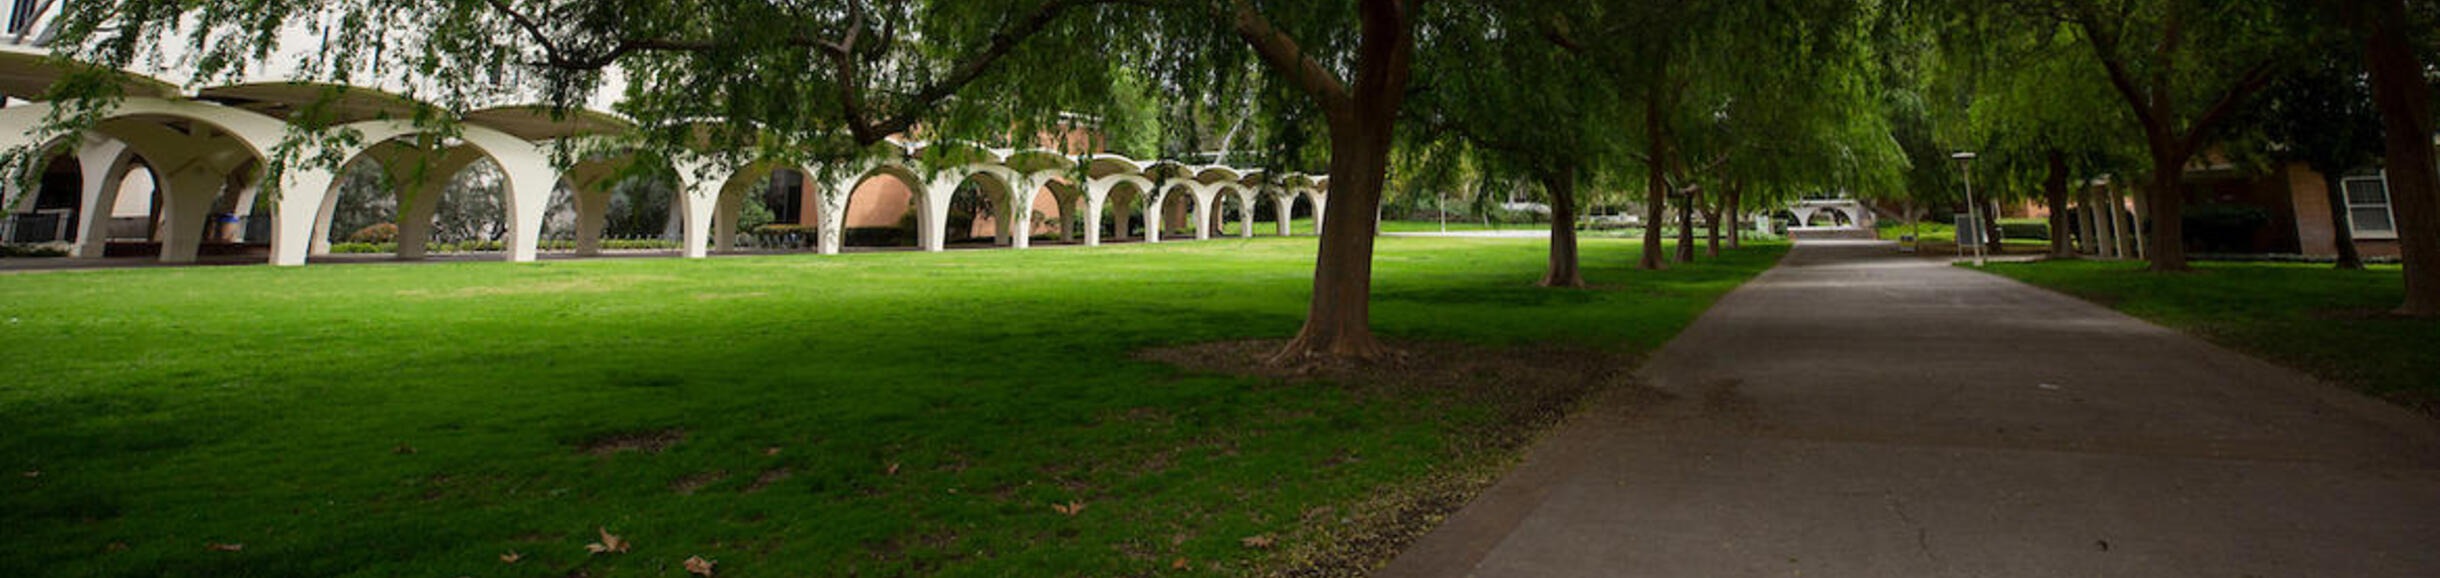 Rivera walkway and green lawn (c) UCR